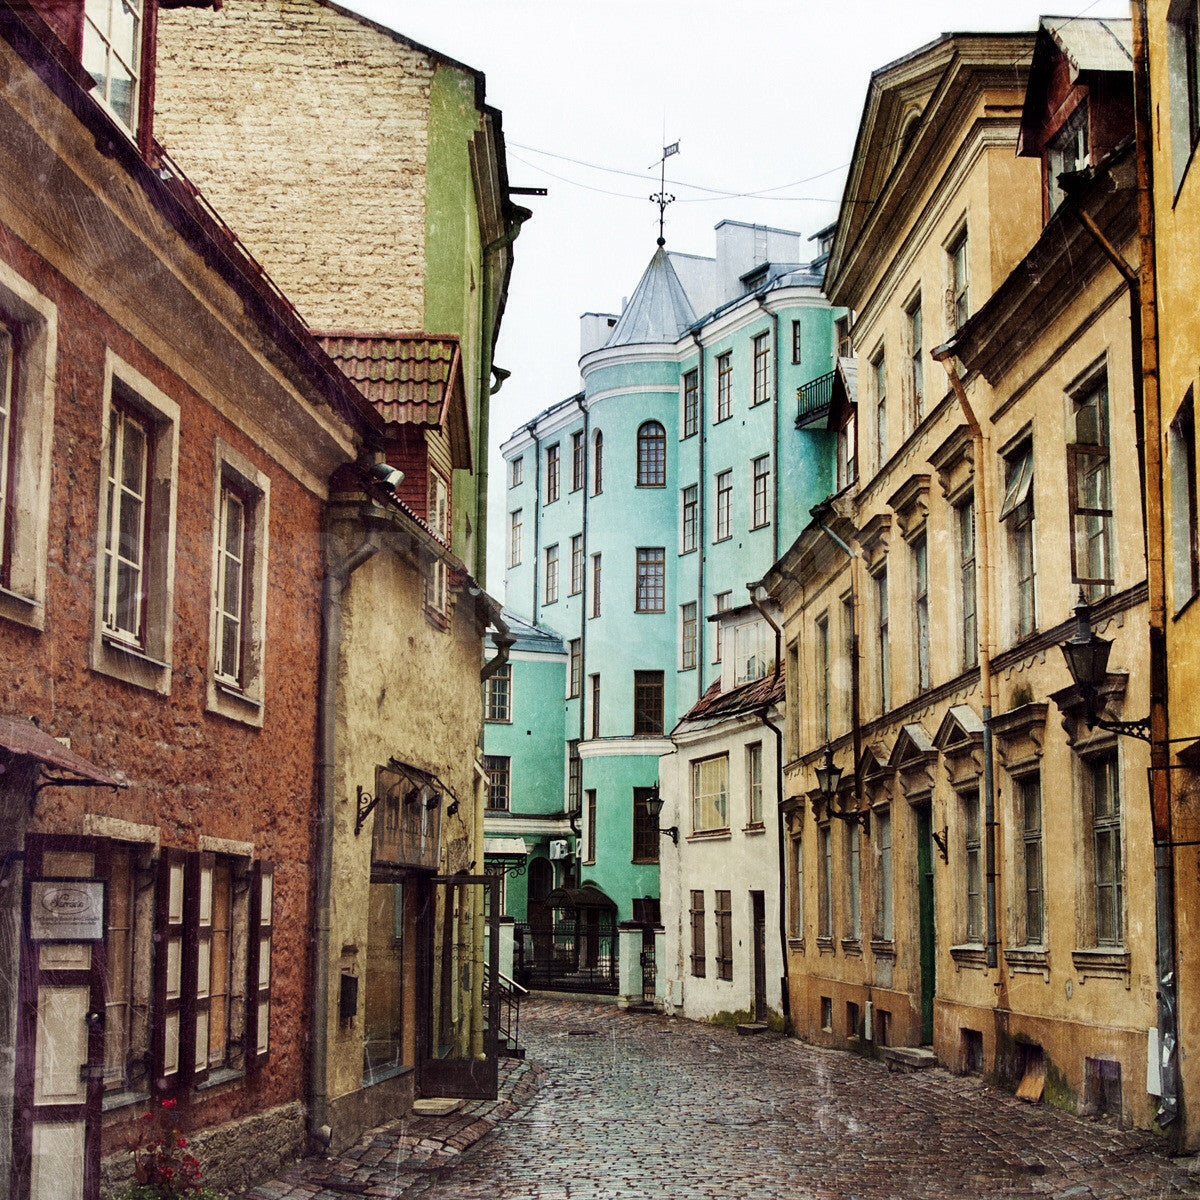 Calles adoquinadas de Tallin Estonia<br> Impresión cromogénica de bellas artes de archivo